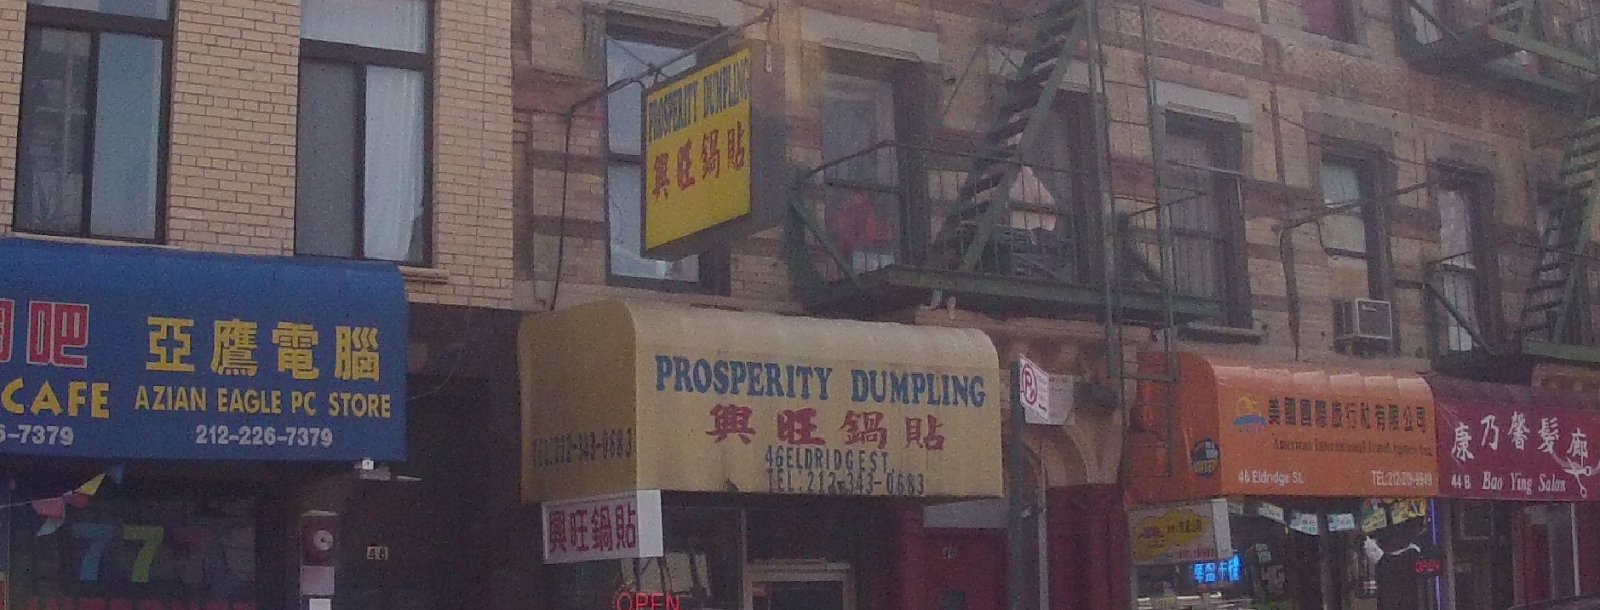 Photo of Prosperity Dumpling in New York City, New York, United States - 4 Picture of Restaurant, Food, Point of interest, Establishment